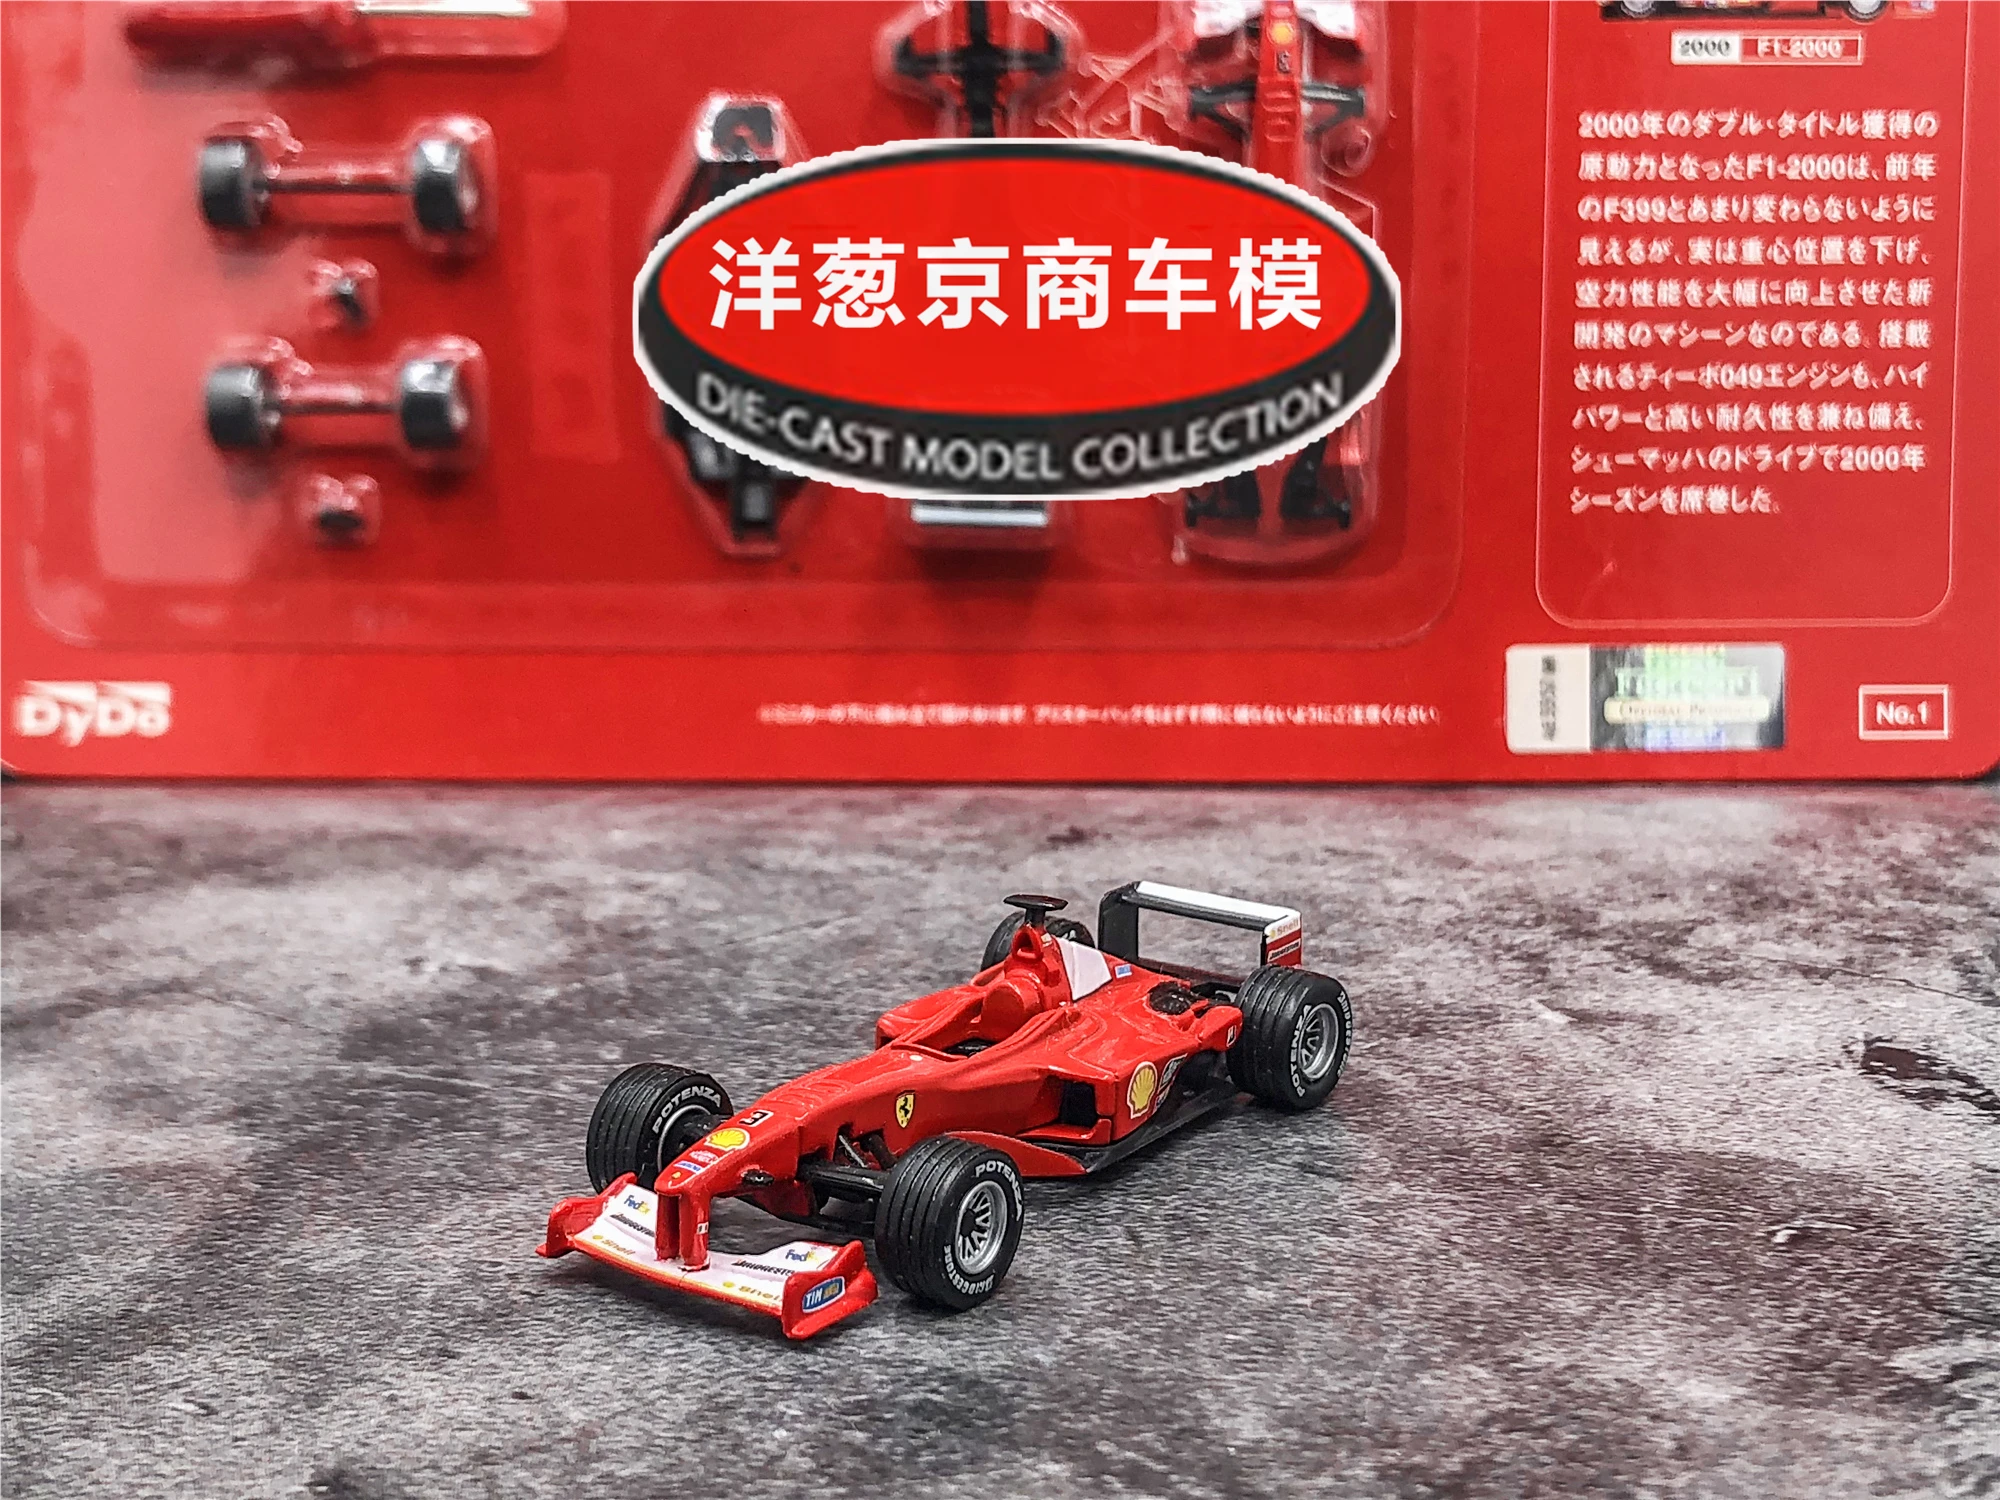 

1/64 KYOSHO Dydo Ferrari F1-2000 Schumacher Formula 1 Collection of die-cast alloy car decoration model toys